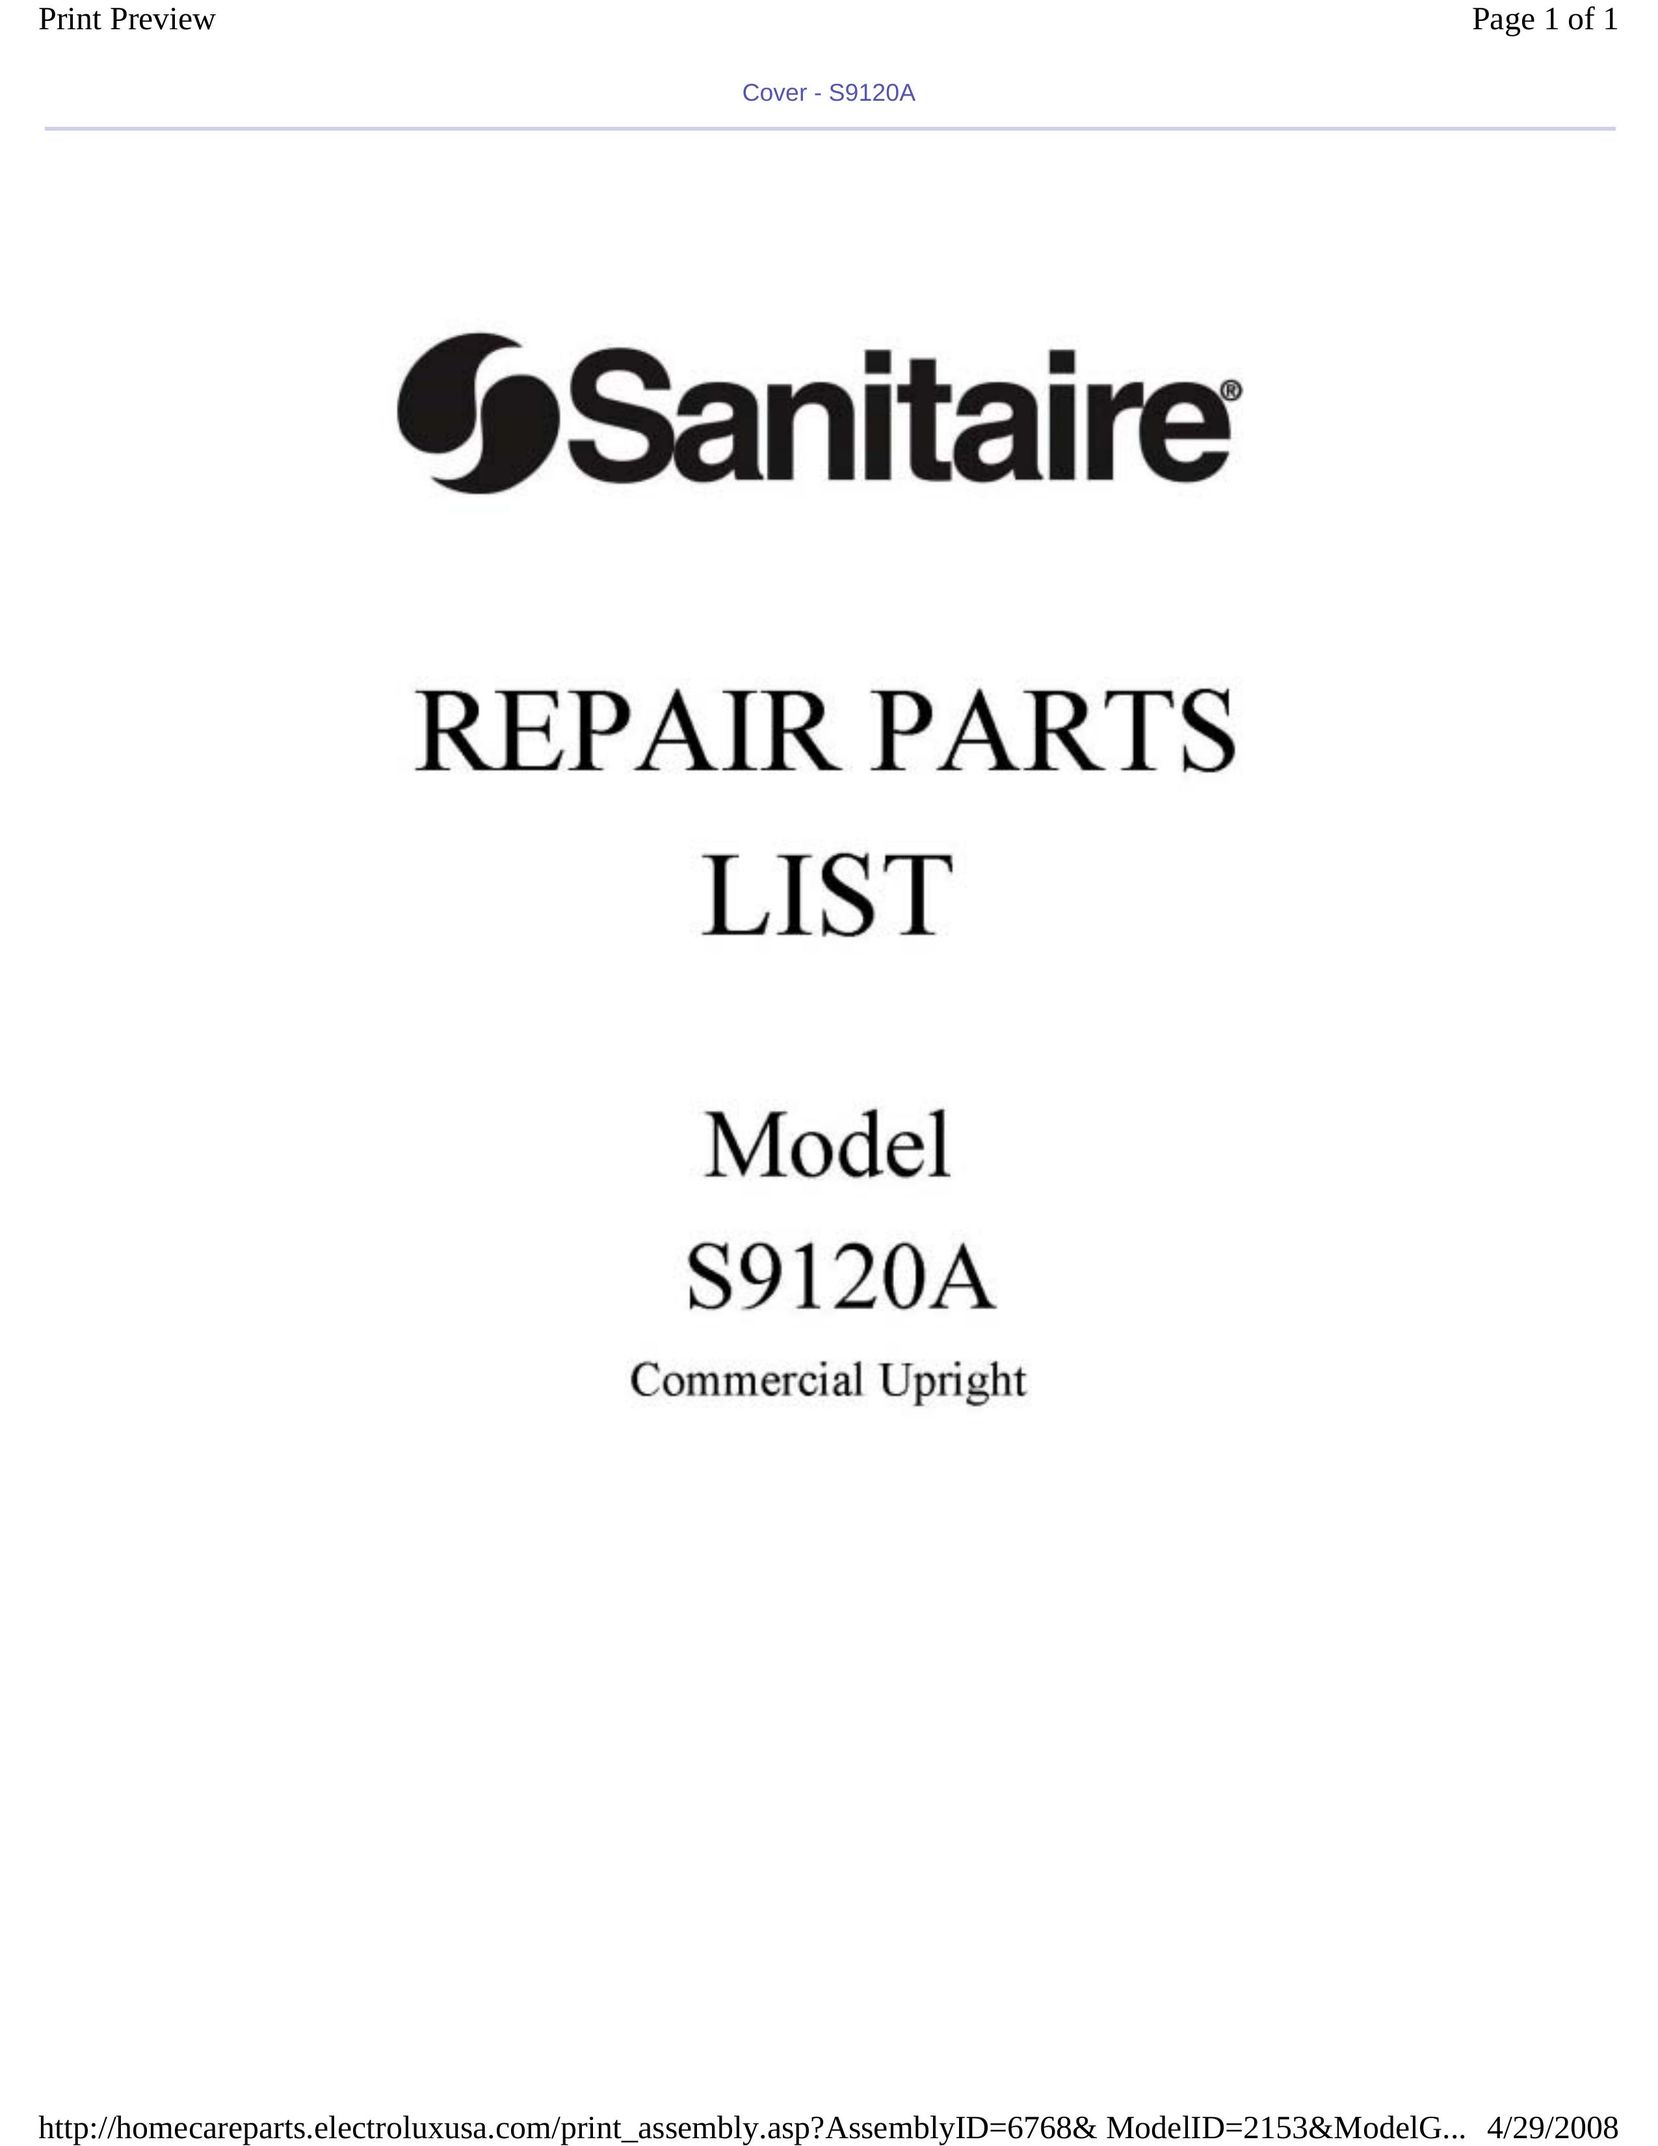 Sanitaire S9120A Vacuum Cleaner User Manual